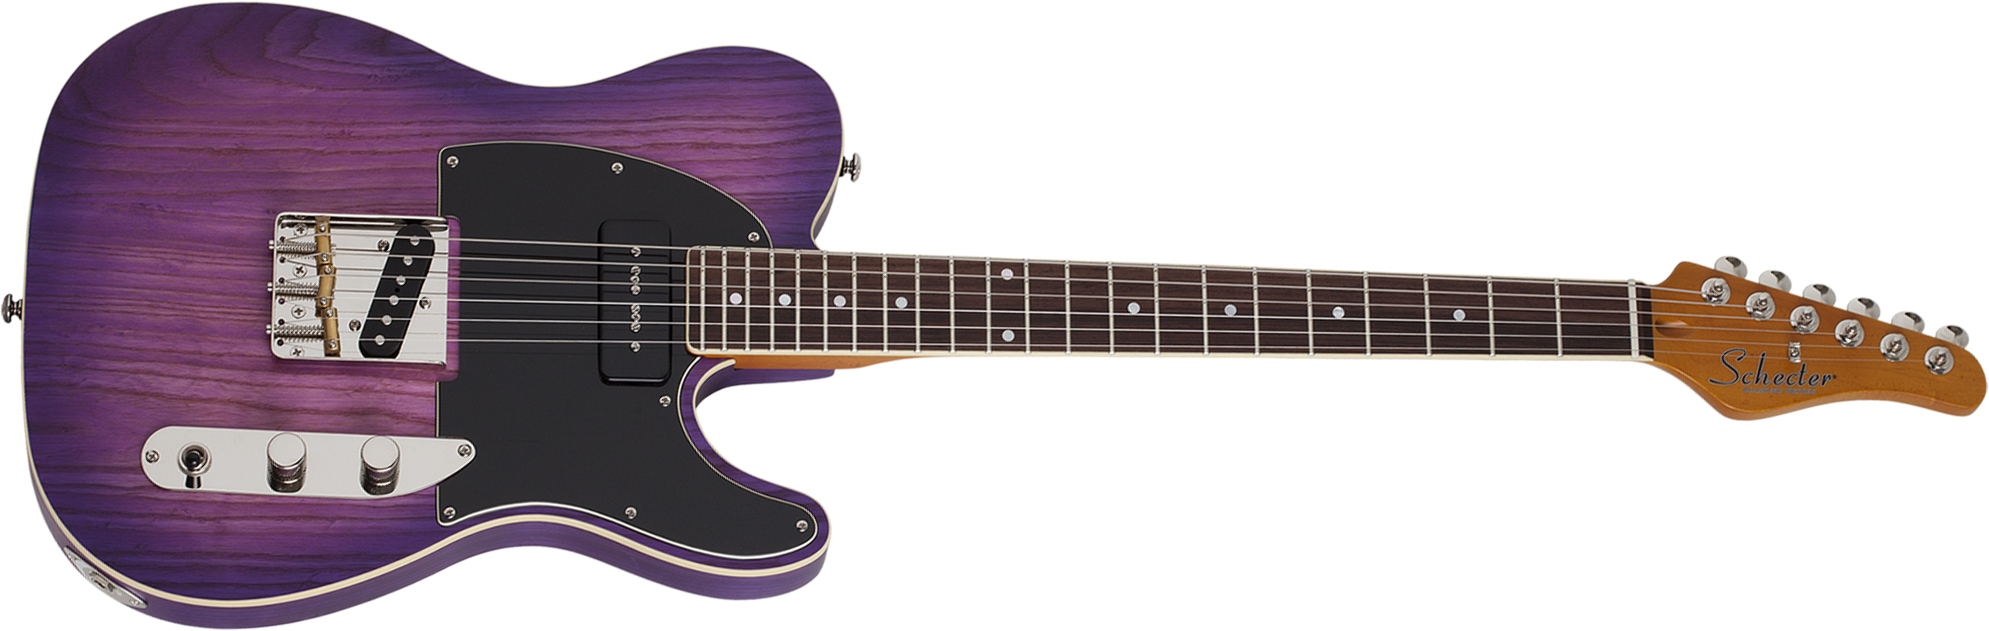 Schecter Pt Special 2s Ht Rw - Purple Burst Pearl - Tel shape electric guitar - Main picture